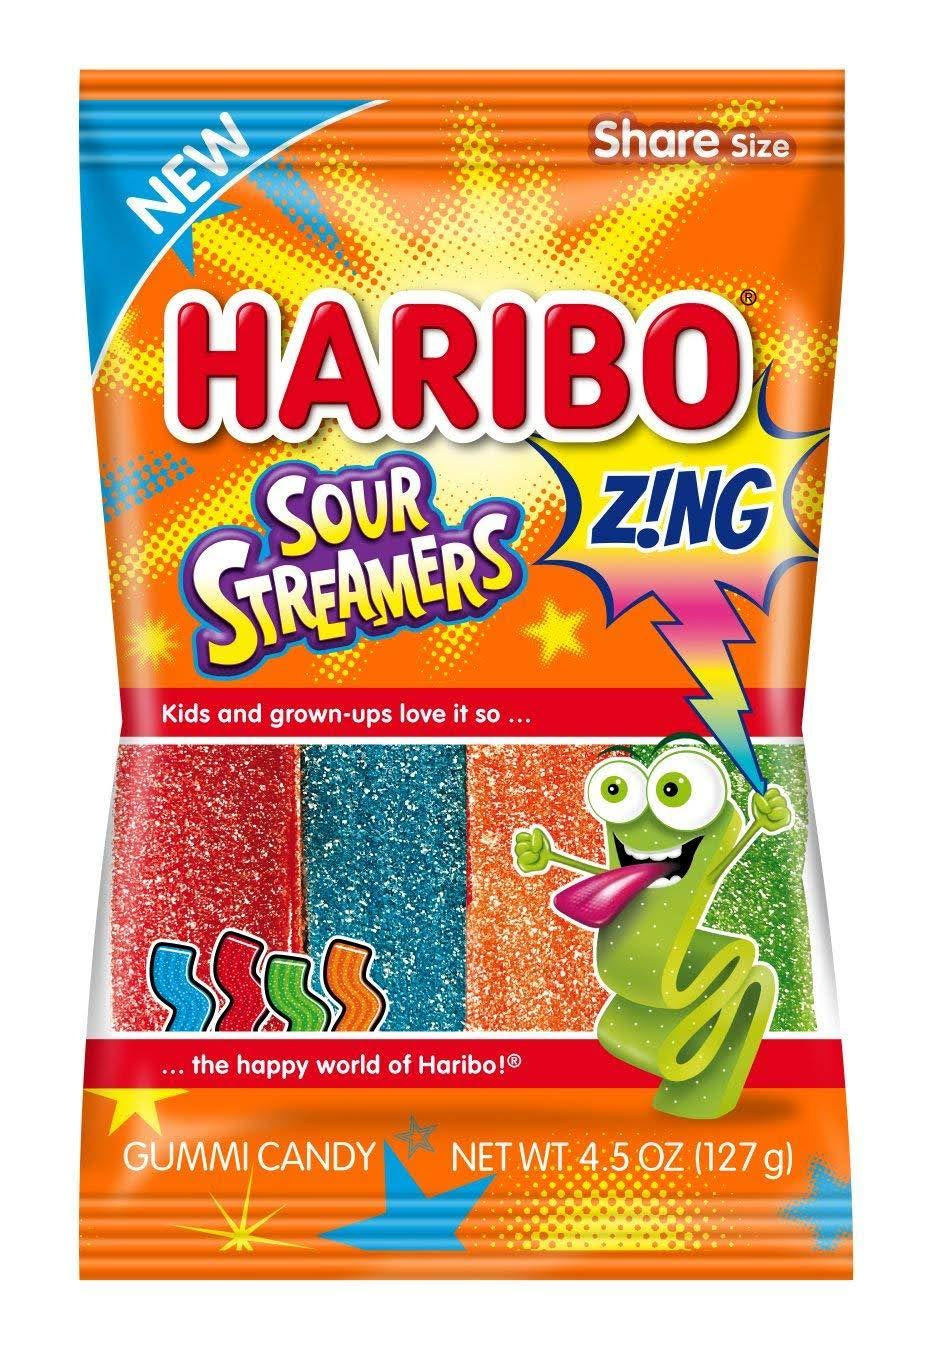 Haribo Zings Sour Streamers